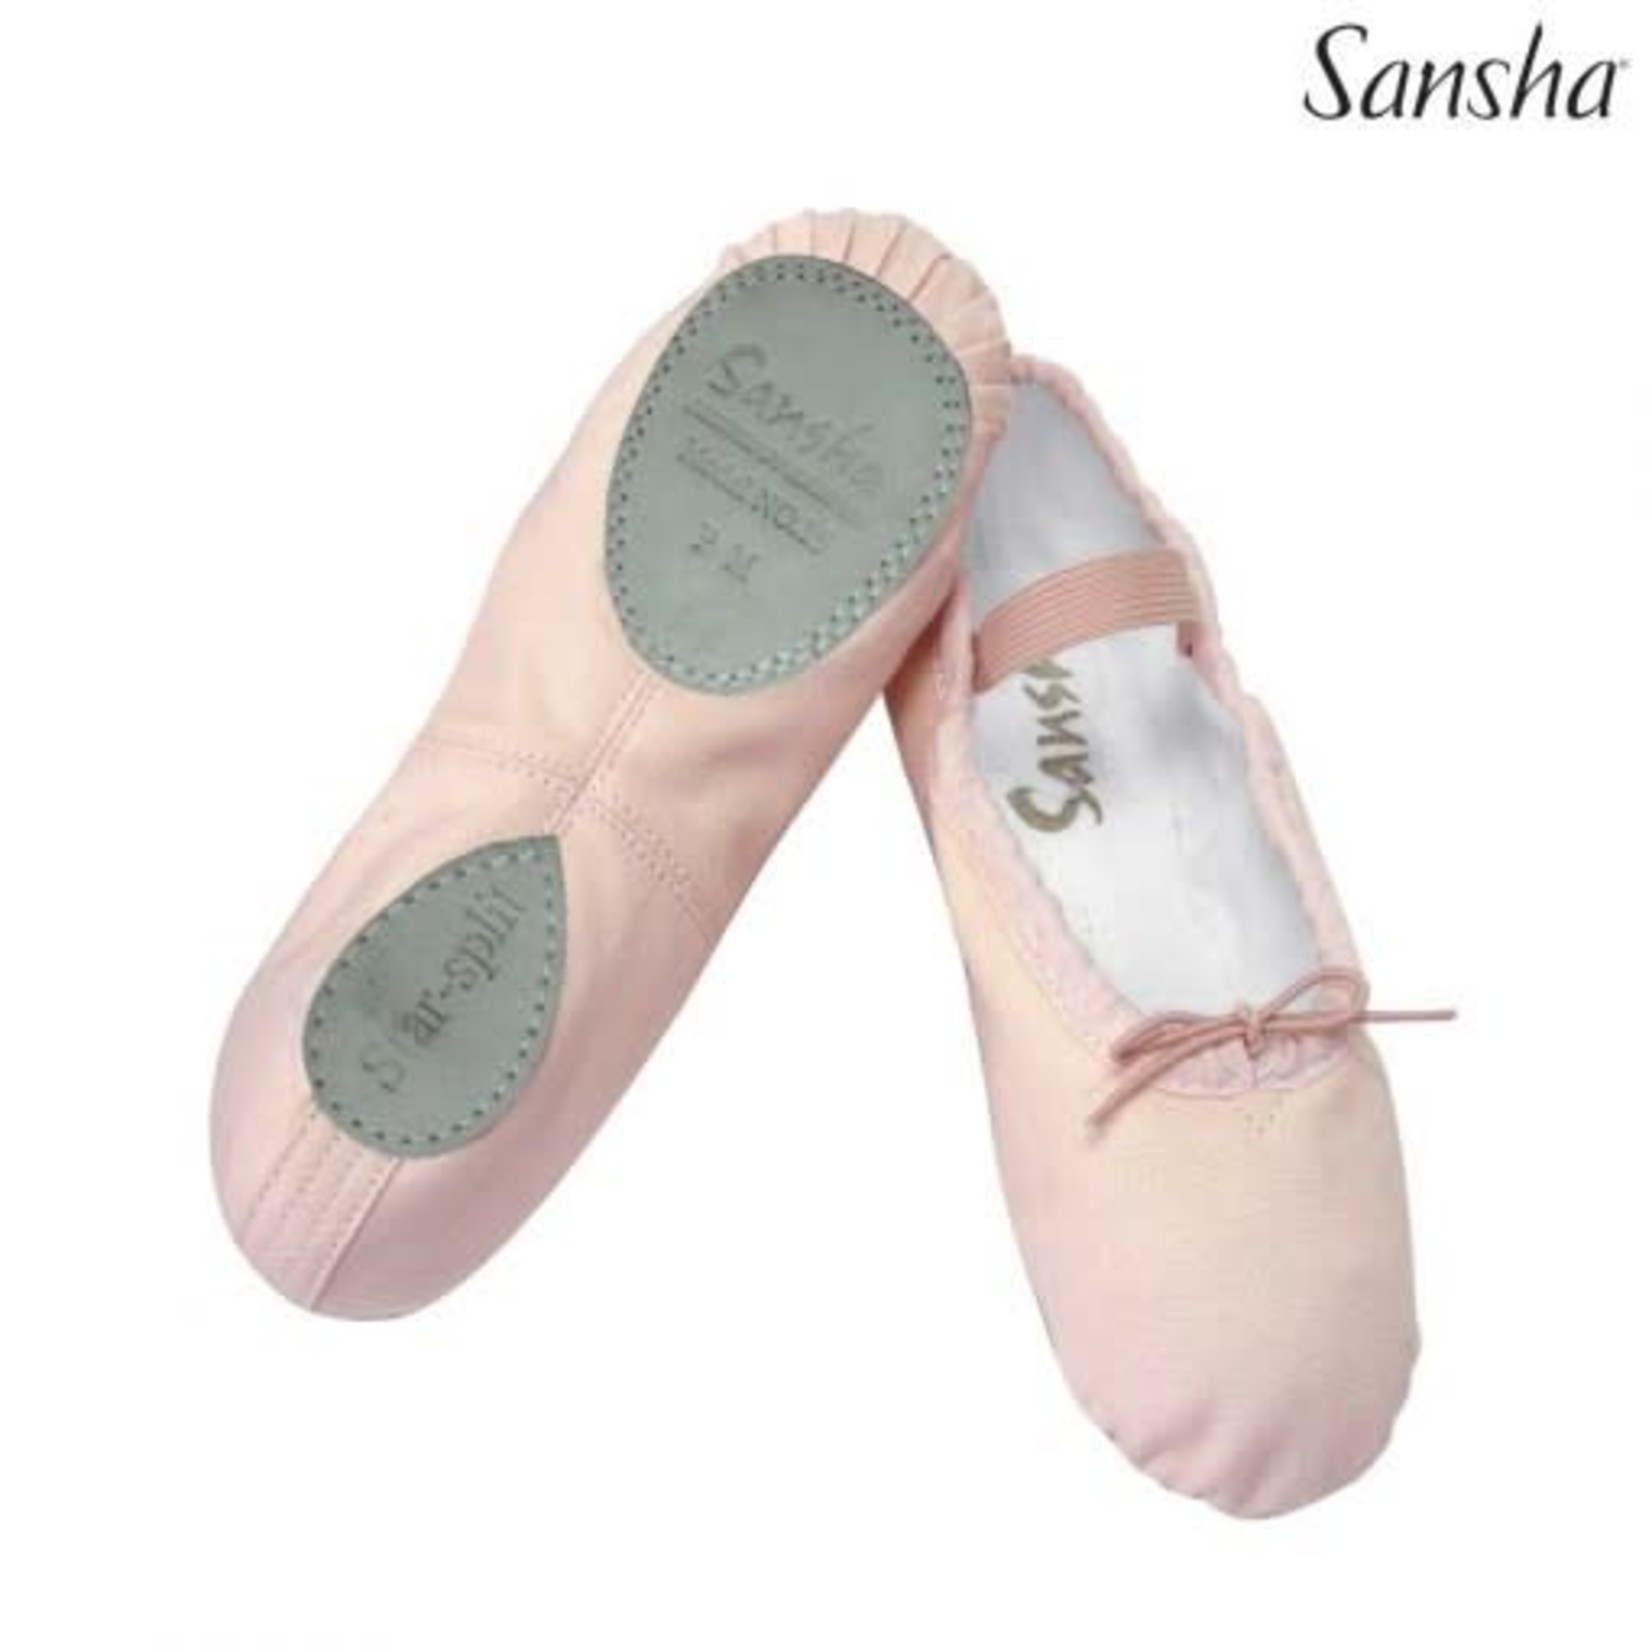 Sansha 15C Star Split Sole Canvas Ballet Slipper  PINK